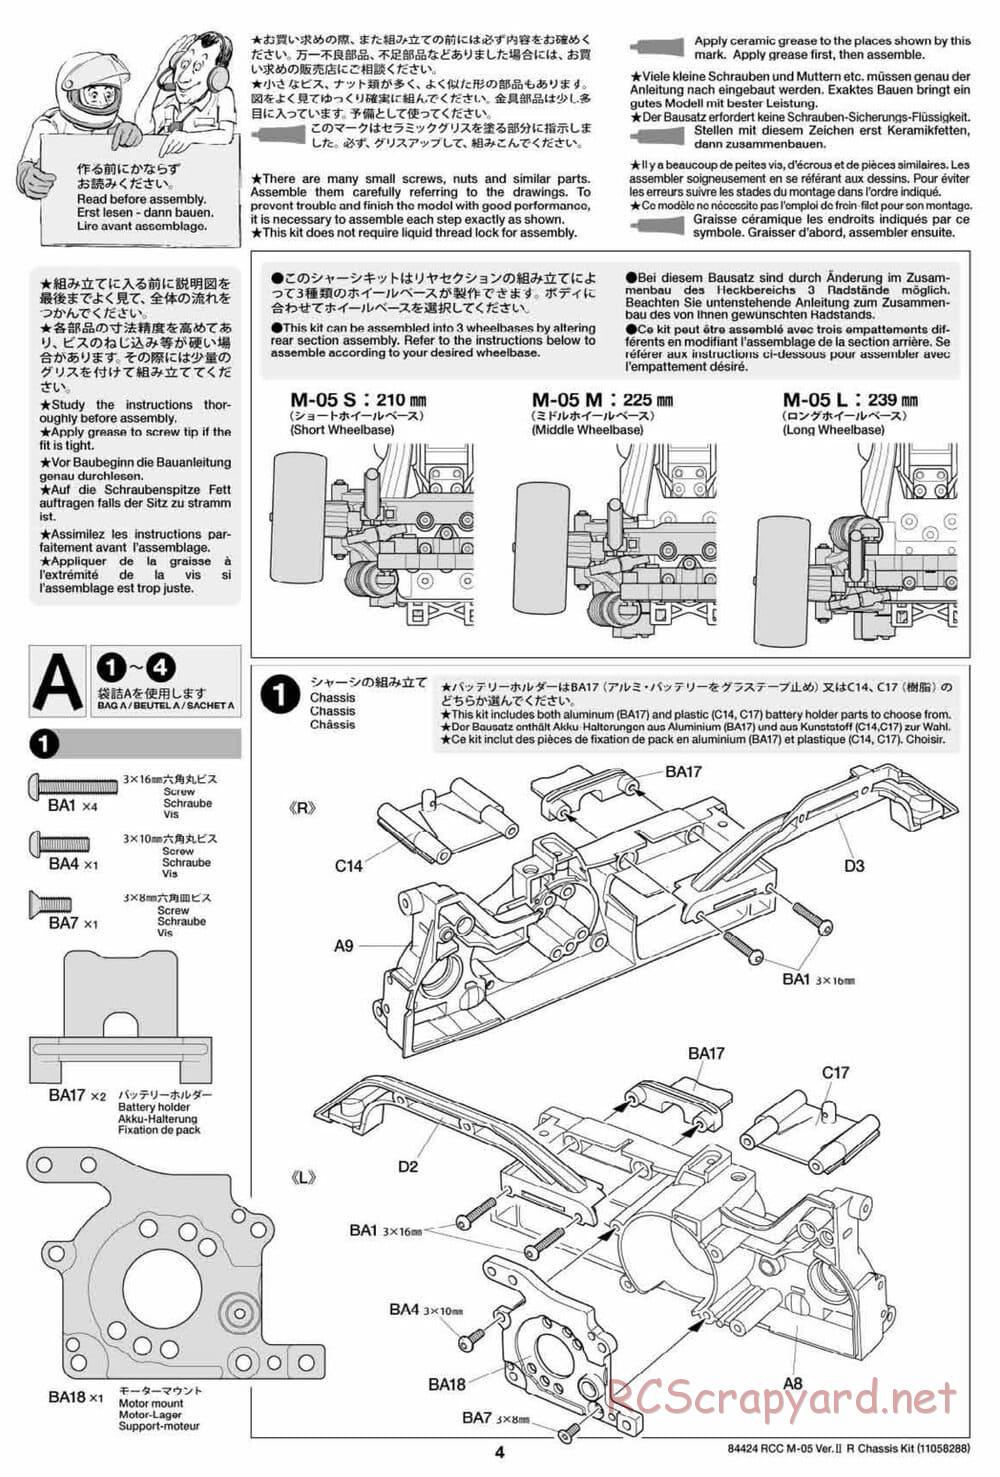 Tamiya - M-05 Ver.II R Chassis Chassis - Manual - Page 4